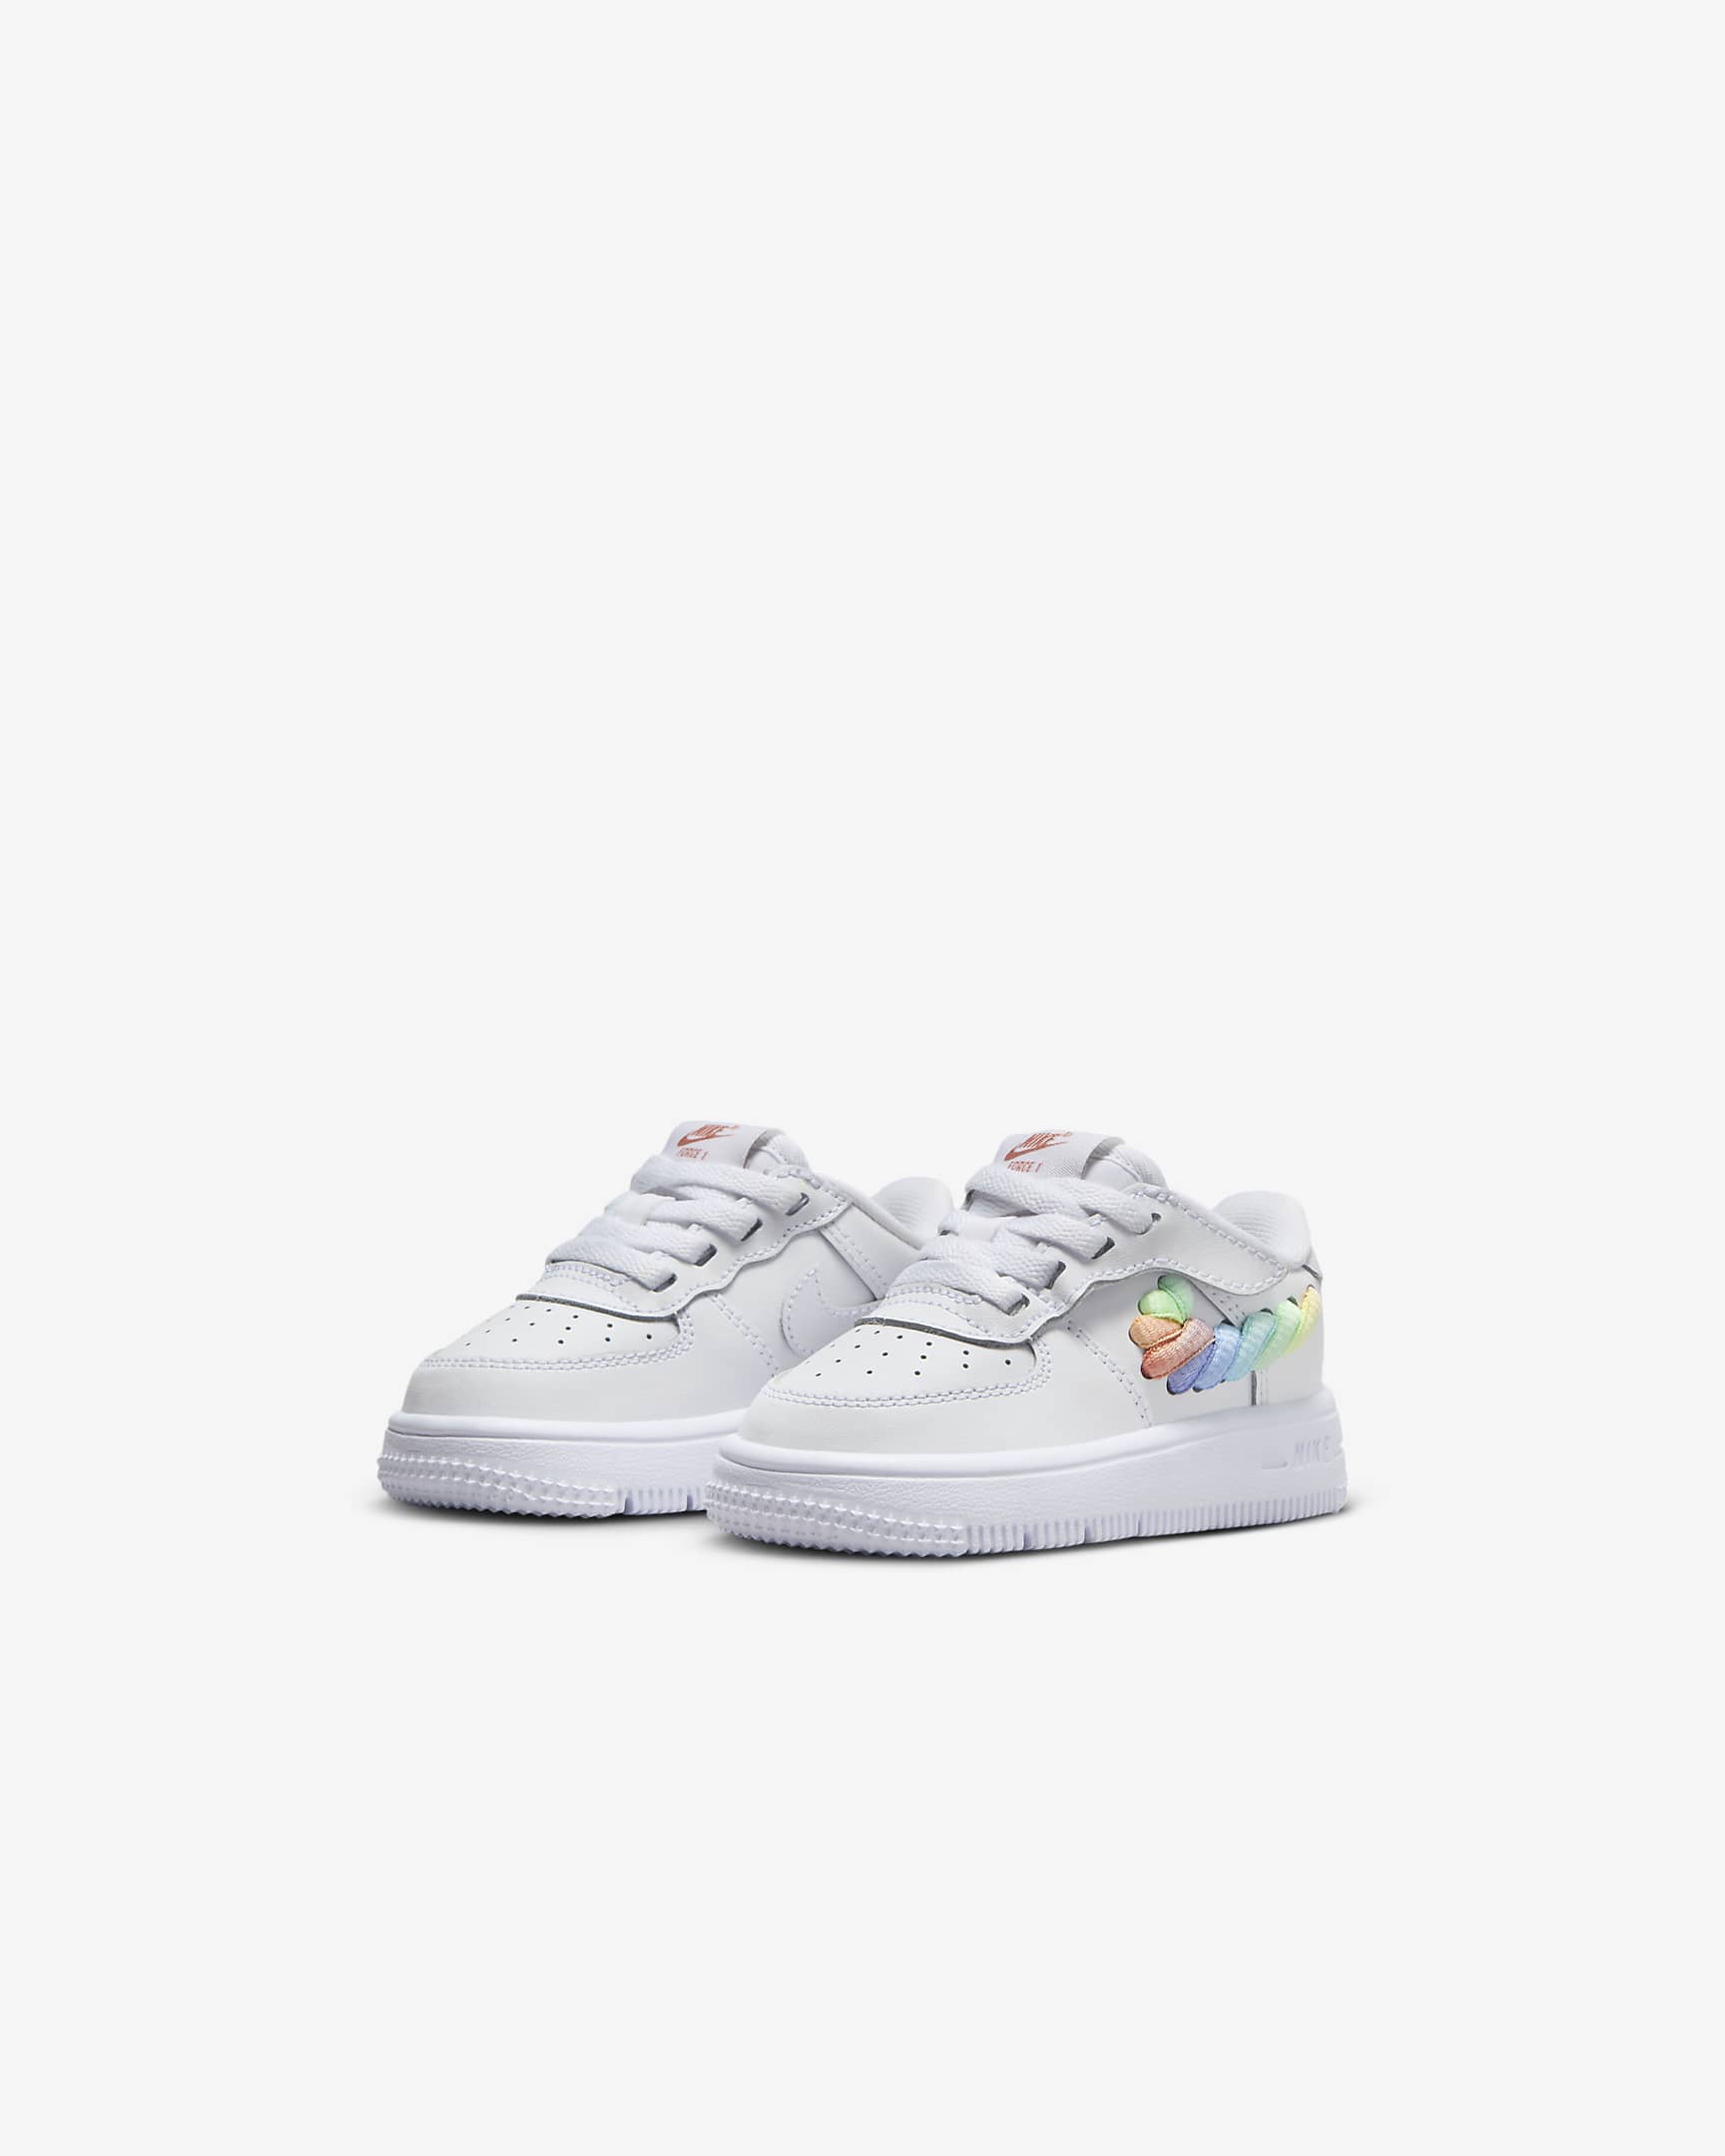 Nike Force 1 Low LV8 EasyOn Baby/Toddler Shoes - White/Terra Blush/Vapor Green/Multi-Color